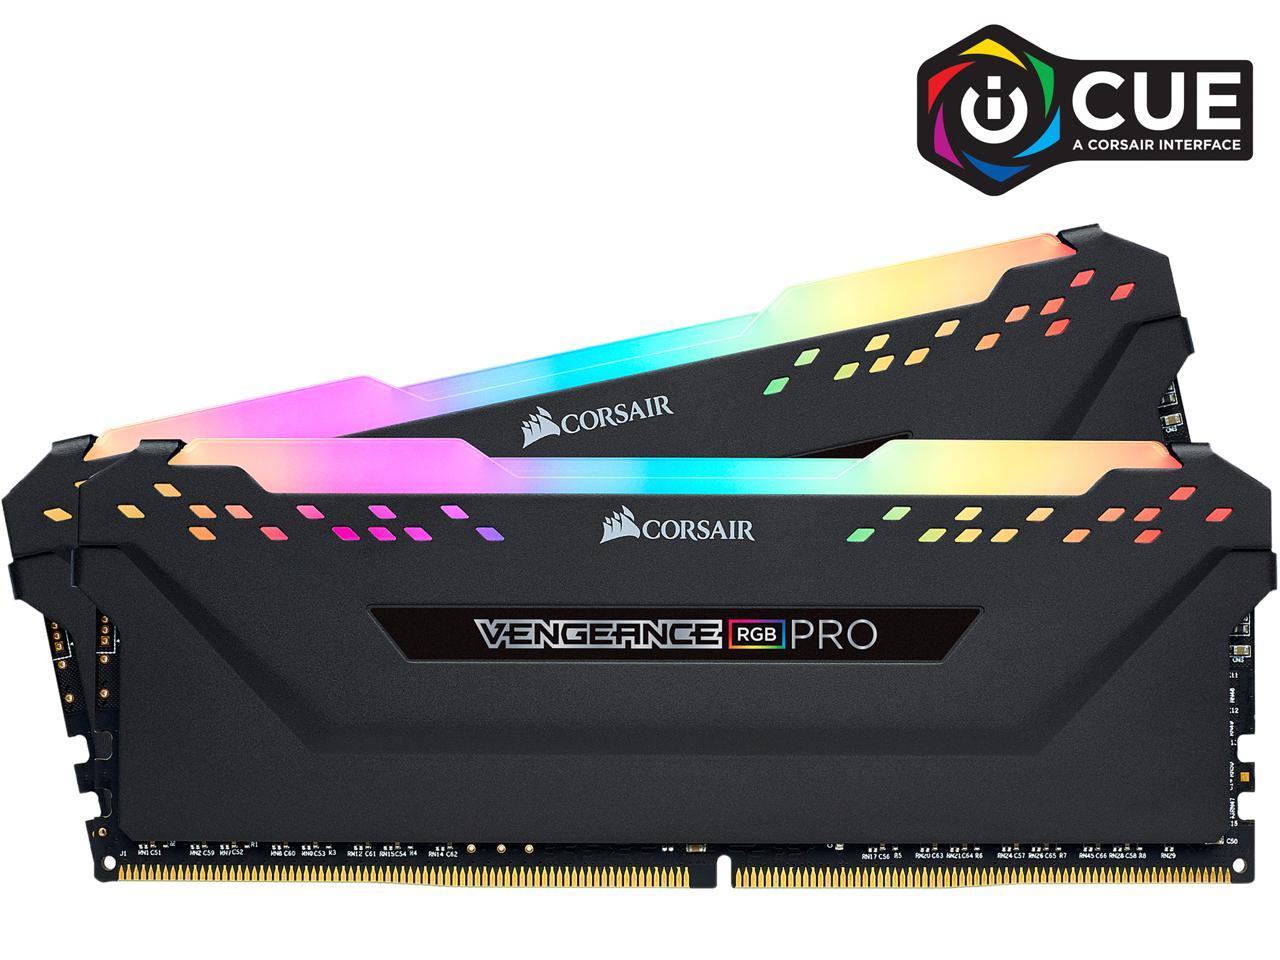 CORSAIR Vengeance RGB Pro 16GB DDR4 3200 RAM - Newegg.com